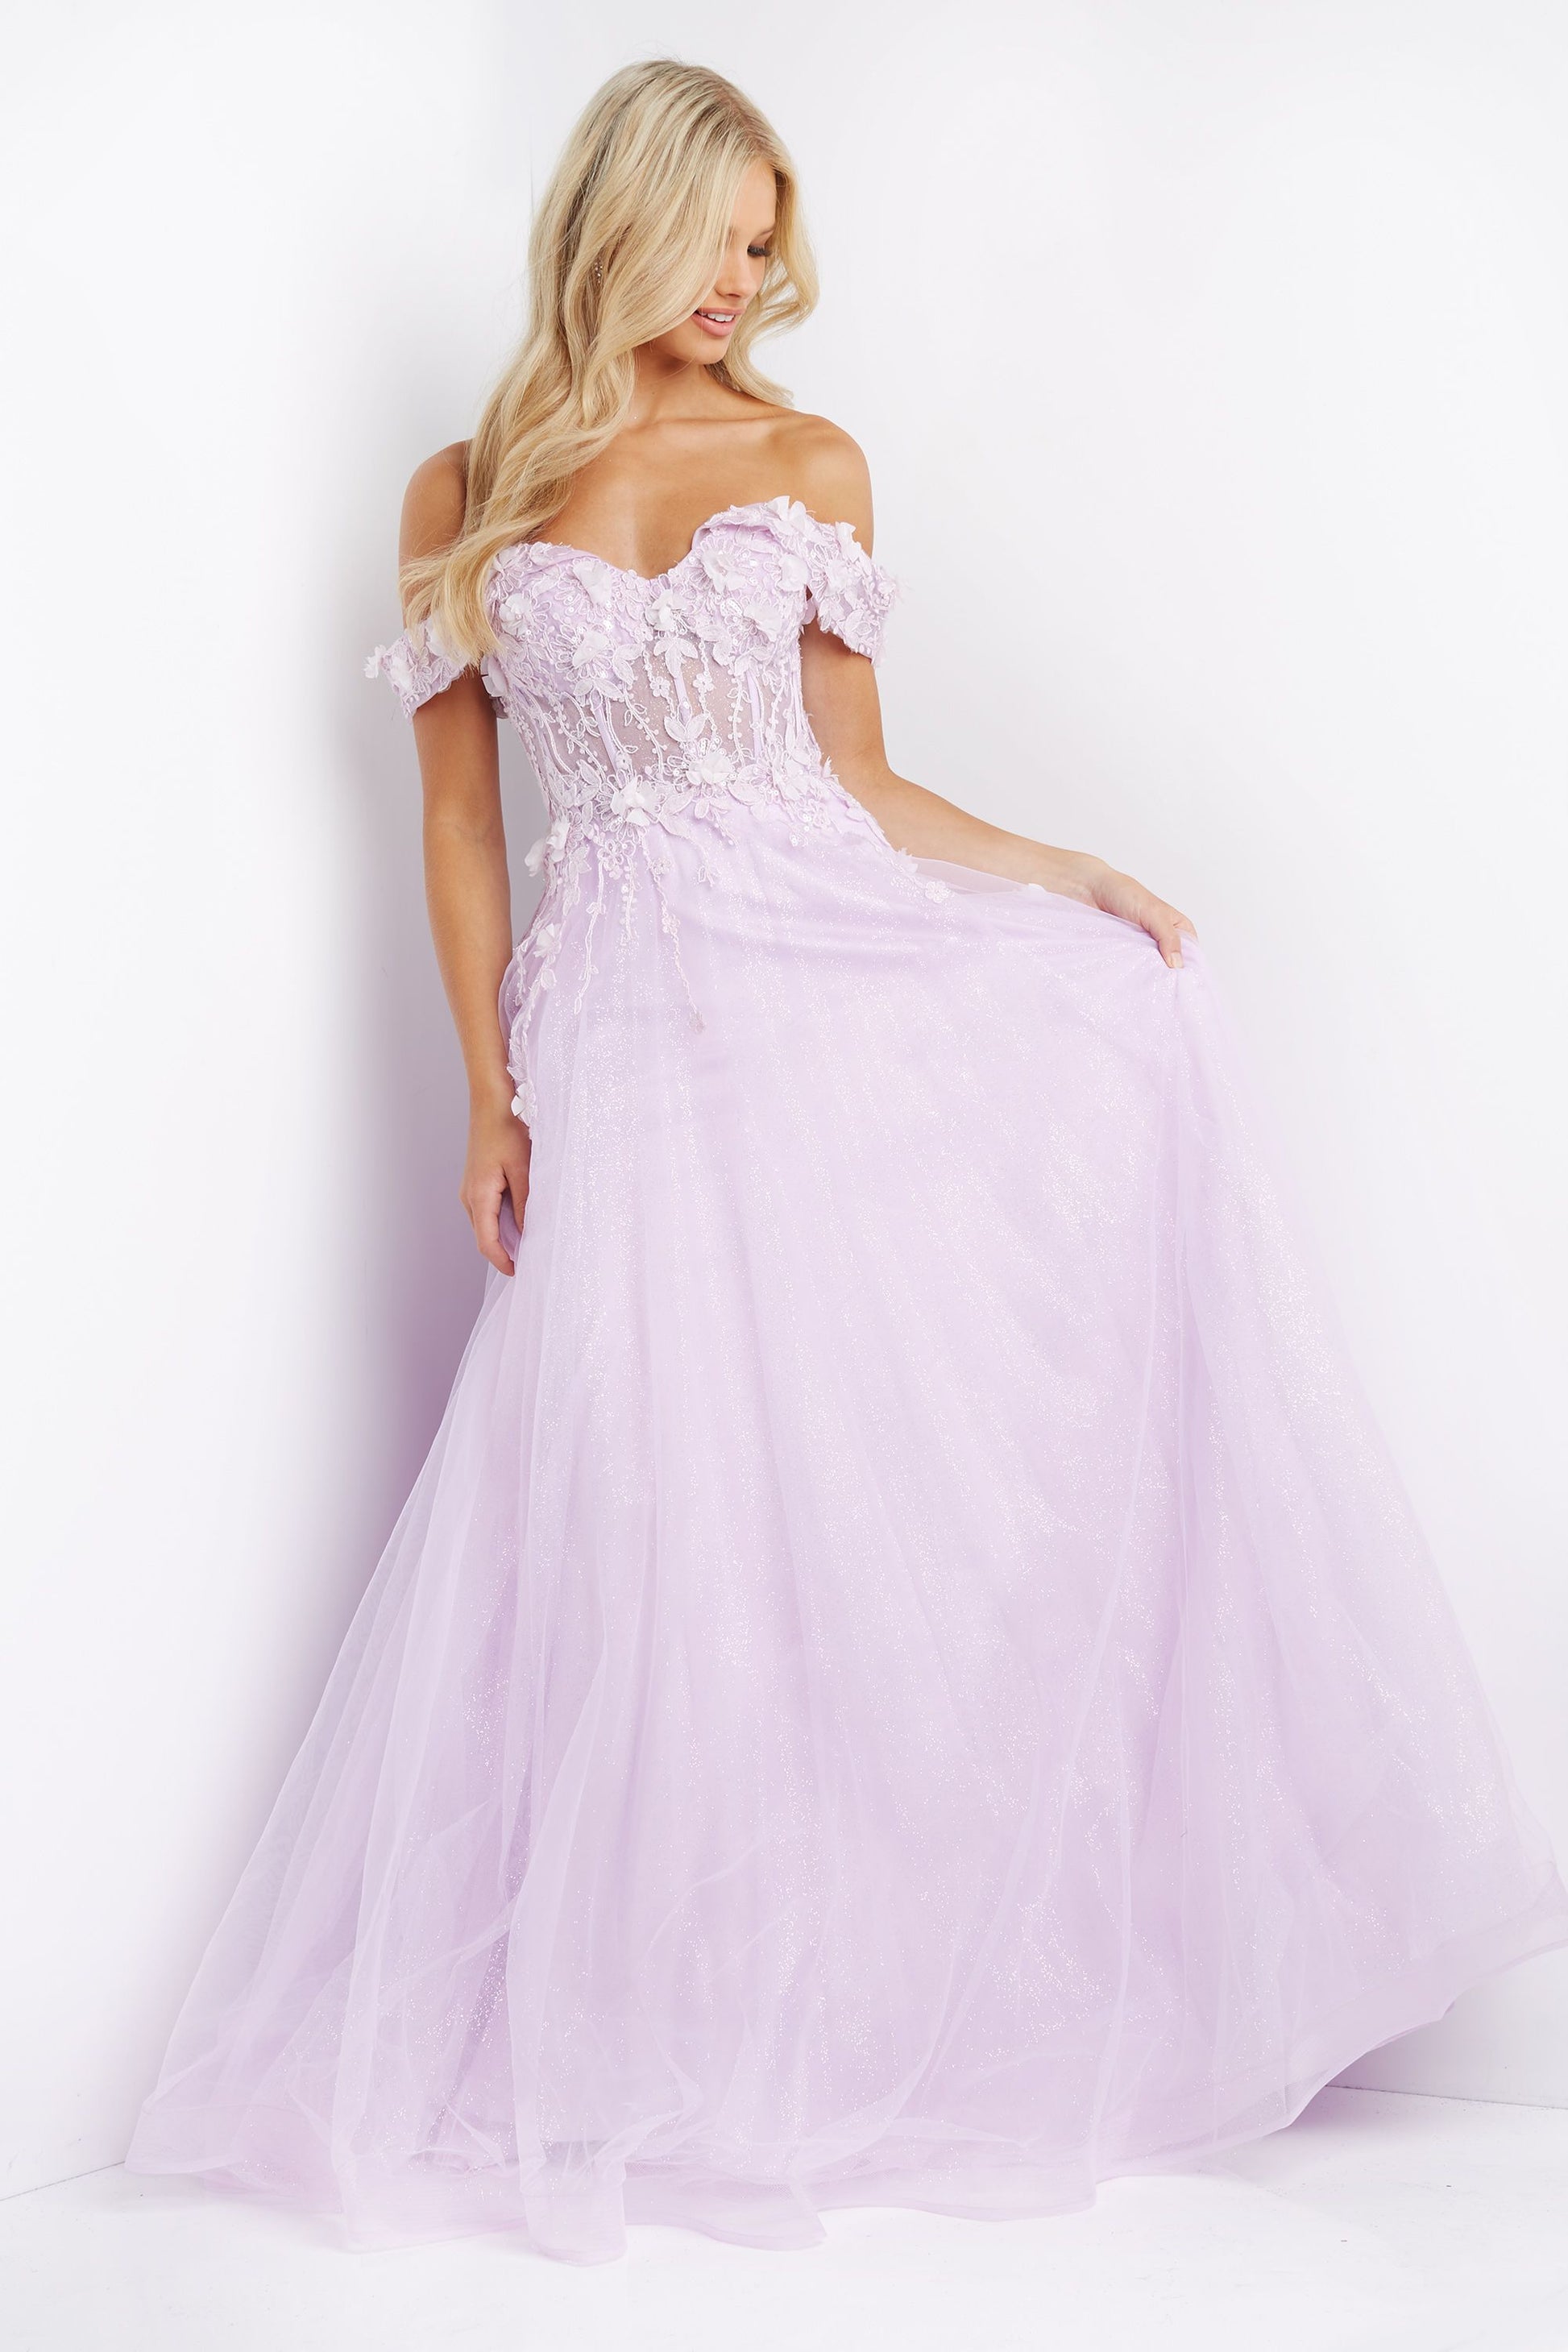 Jovani-JVN-08295-lilac-prom-dress-front-off-the-shoulder-3D-lace-appliques-corset-sheer-bodice-glitter-ballgown-skirt